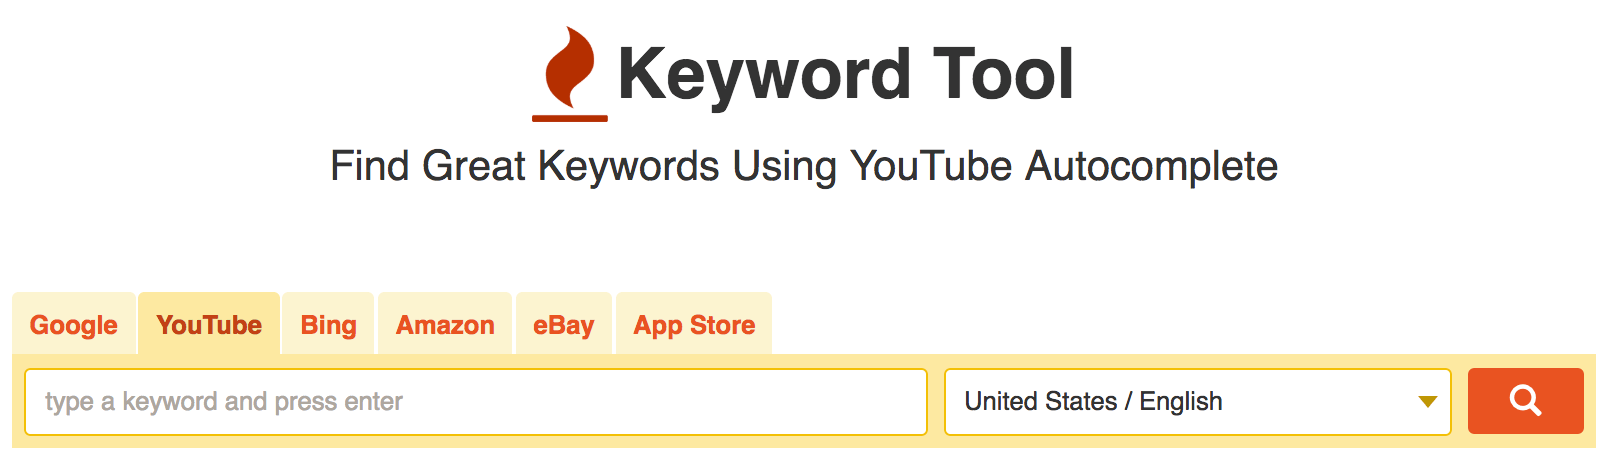 the Keyword Tool helps you find keywords